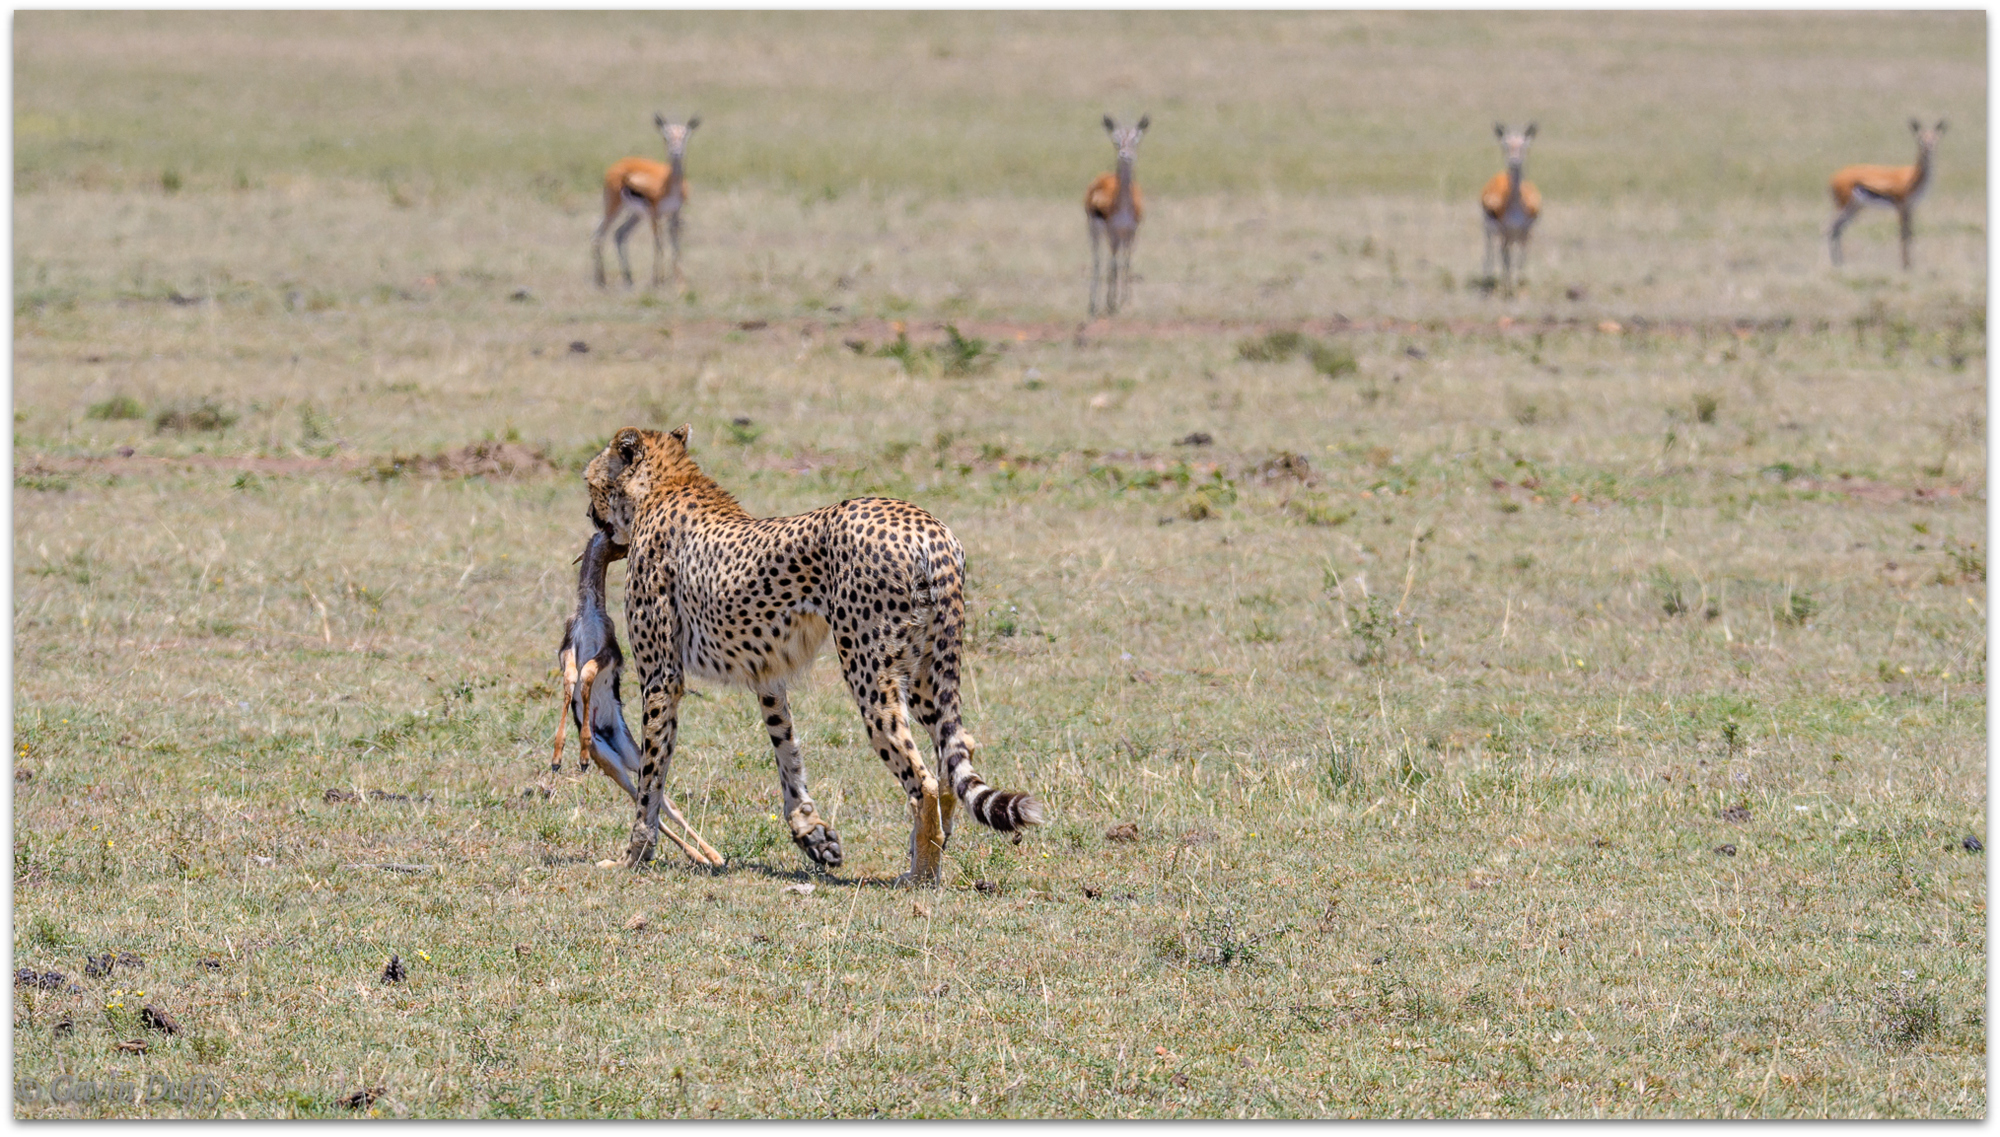 Cheetah with gazelle kill © Gavin Duffy